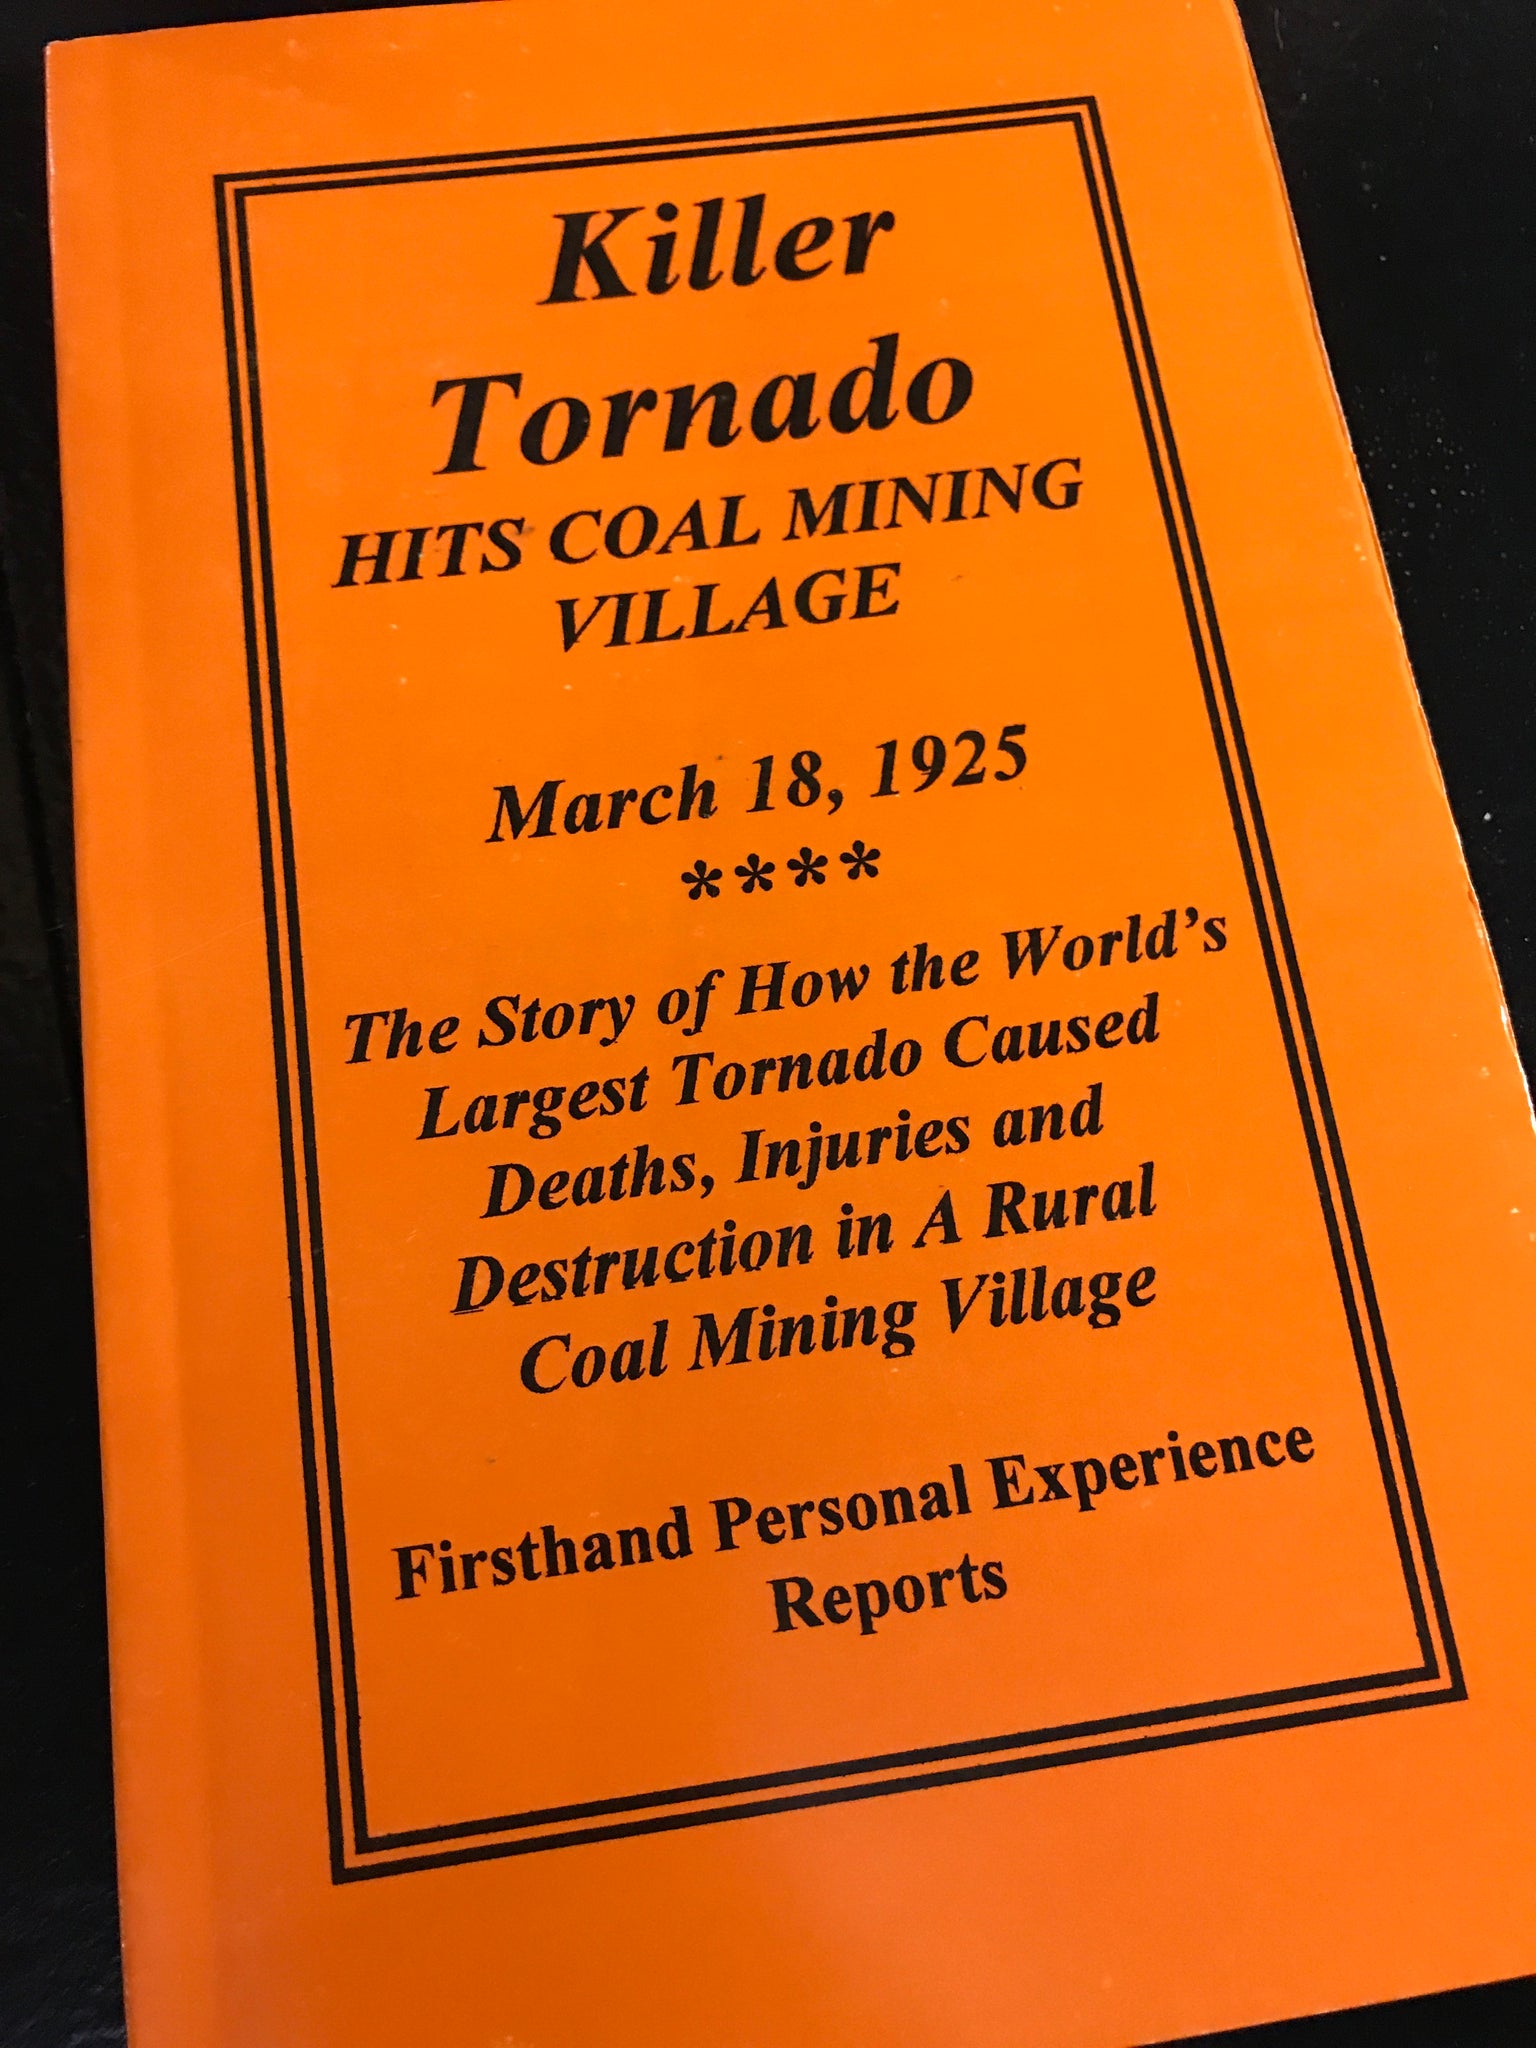 "Killer Tornado" Compiled by James T. Carrier